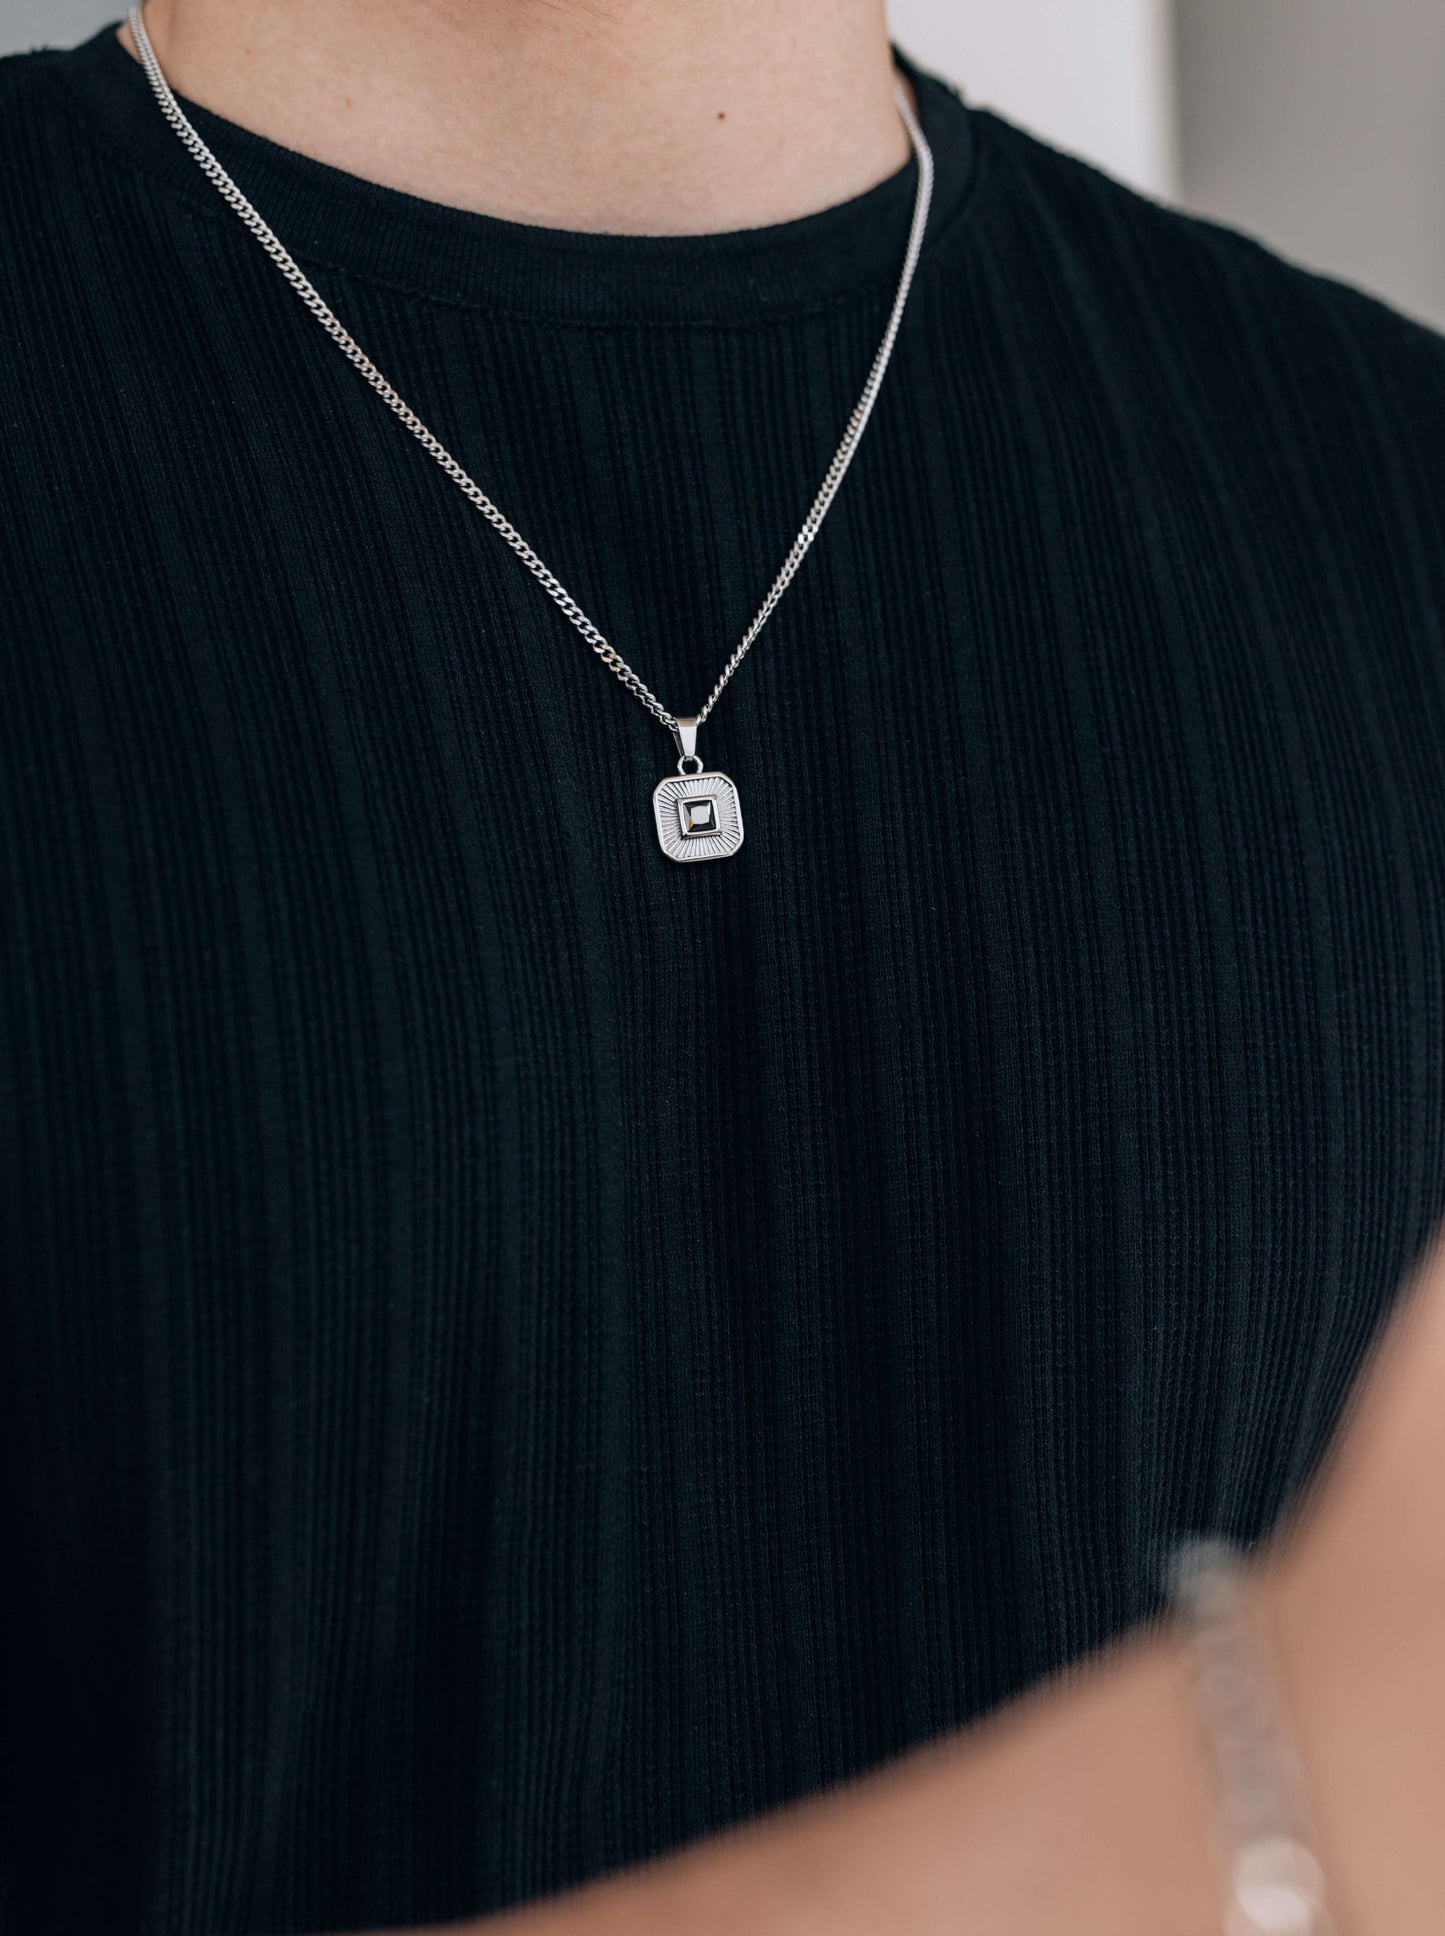 Silver Square Pendant Necklace WIth Black Cubic Zirconia Stone For Men or Women - Pendant Necklace - Boutique Wear RENN 